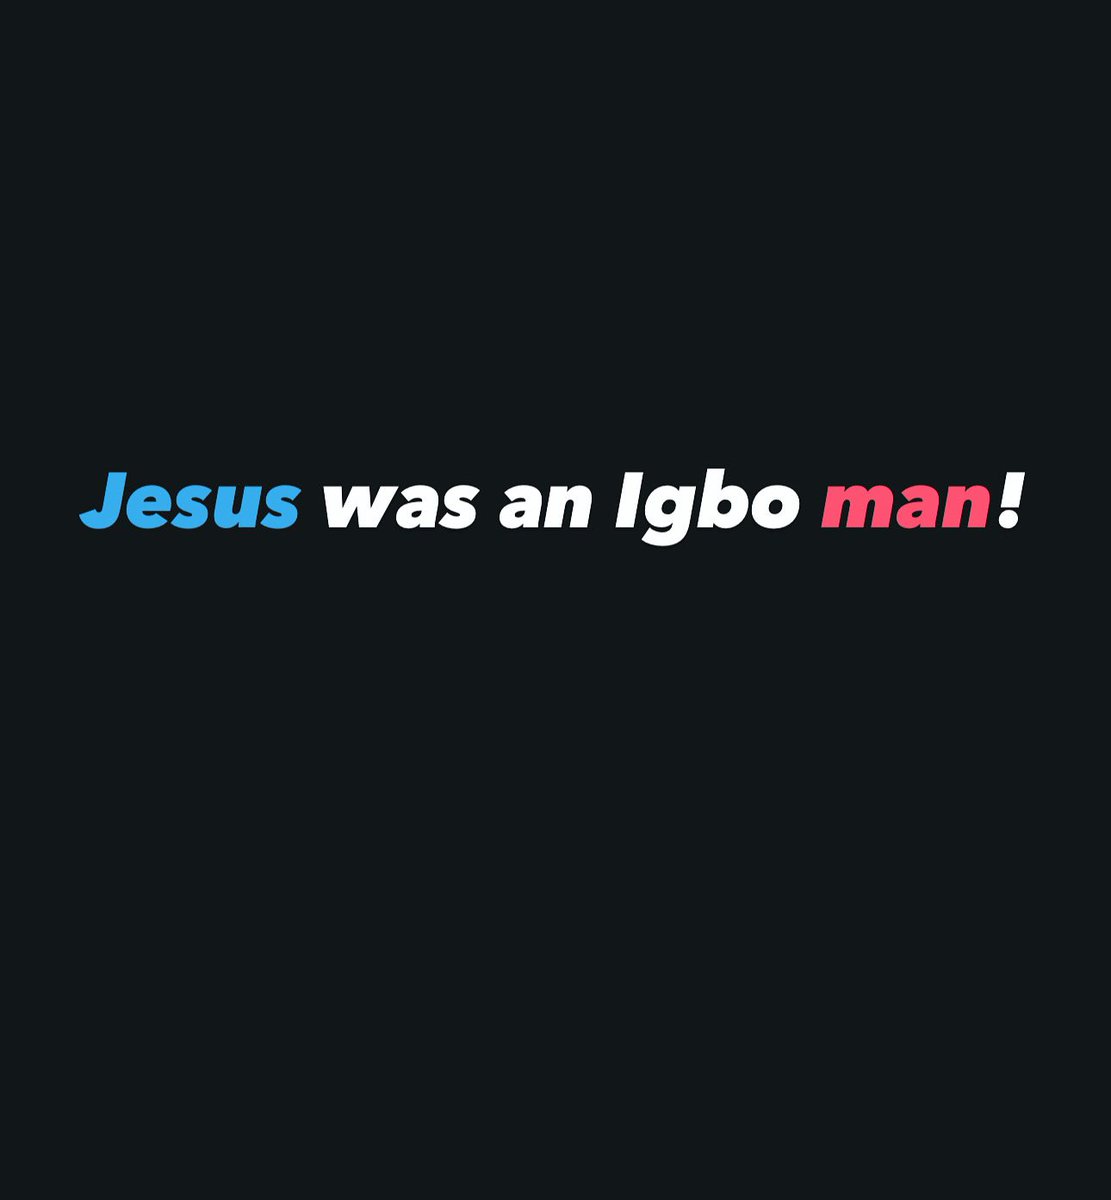 Jesus was an Igbo man!